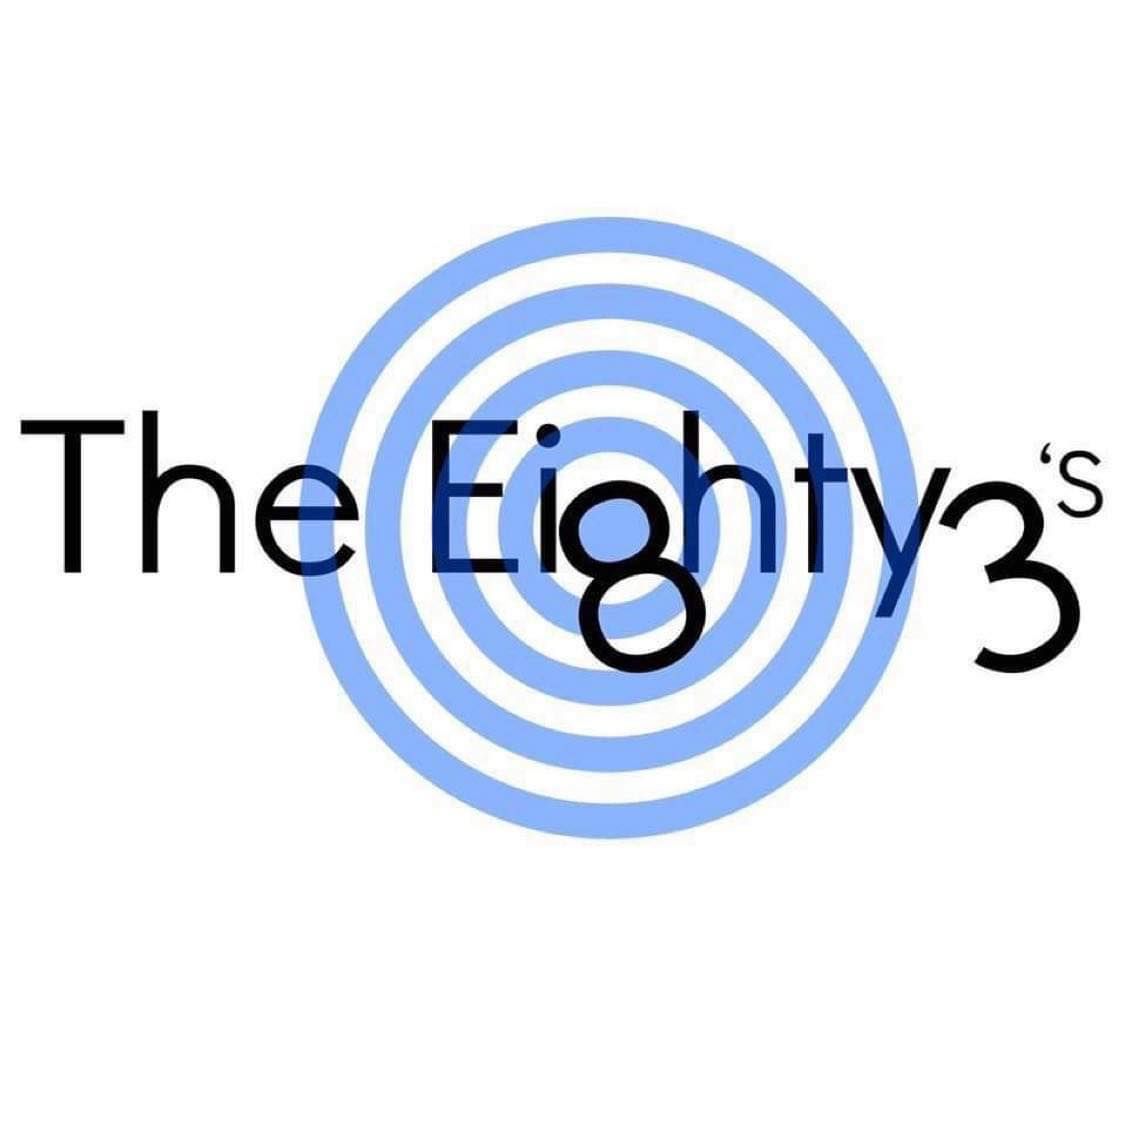 The Eighty 3's